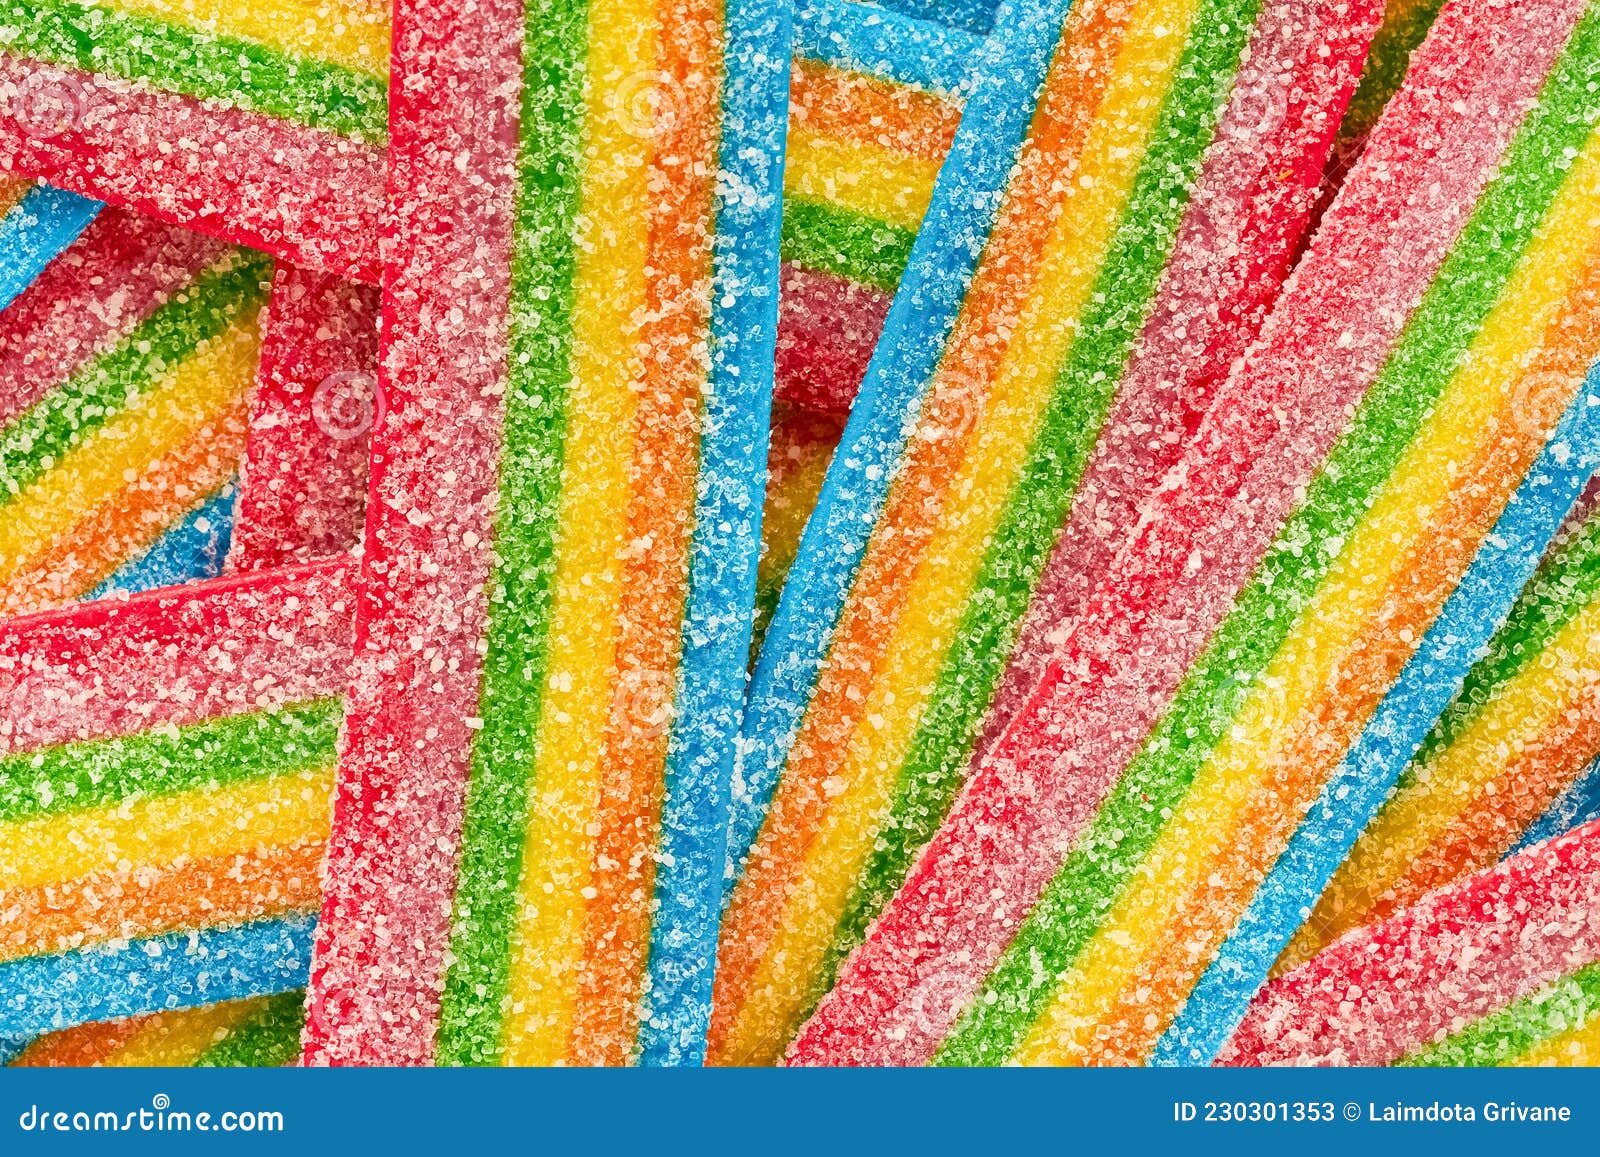 rainbow candy wallpaper